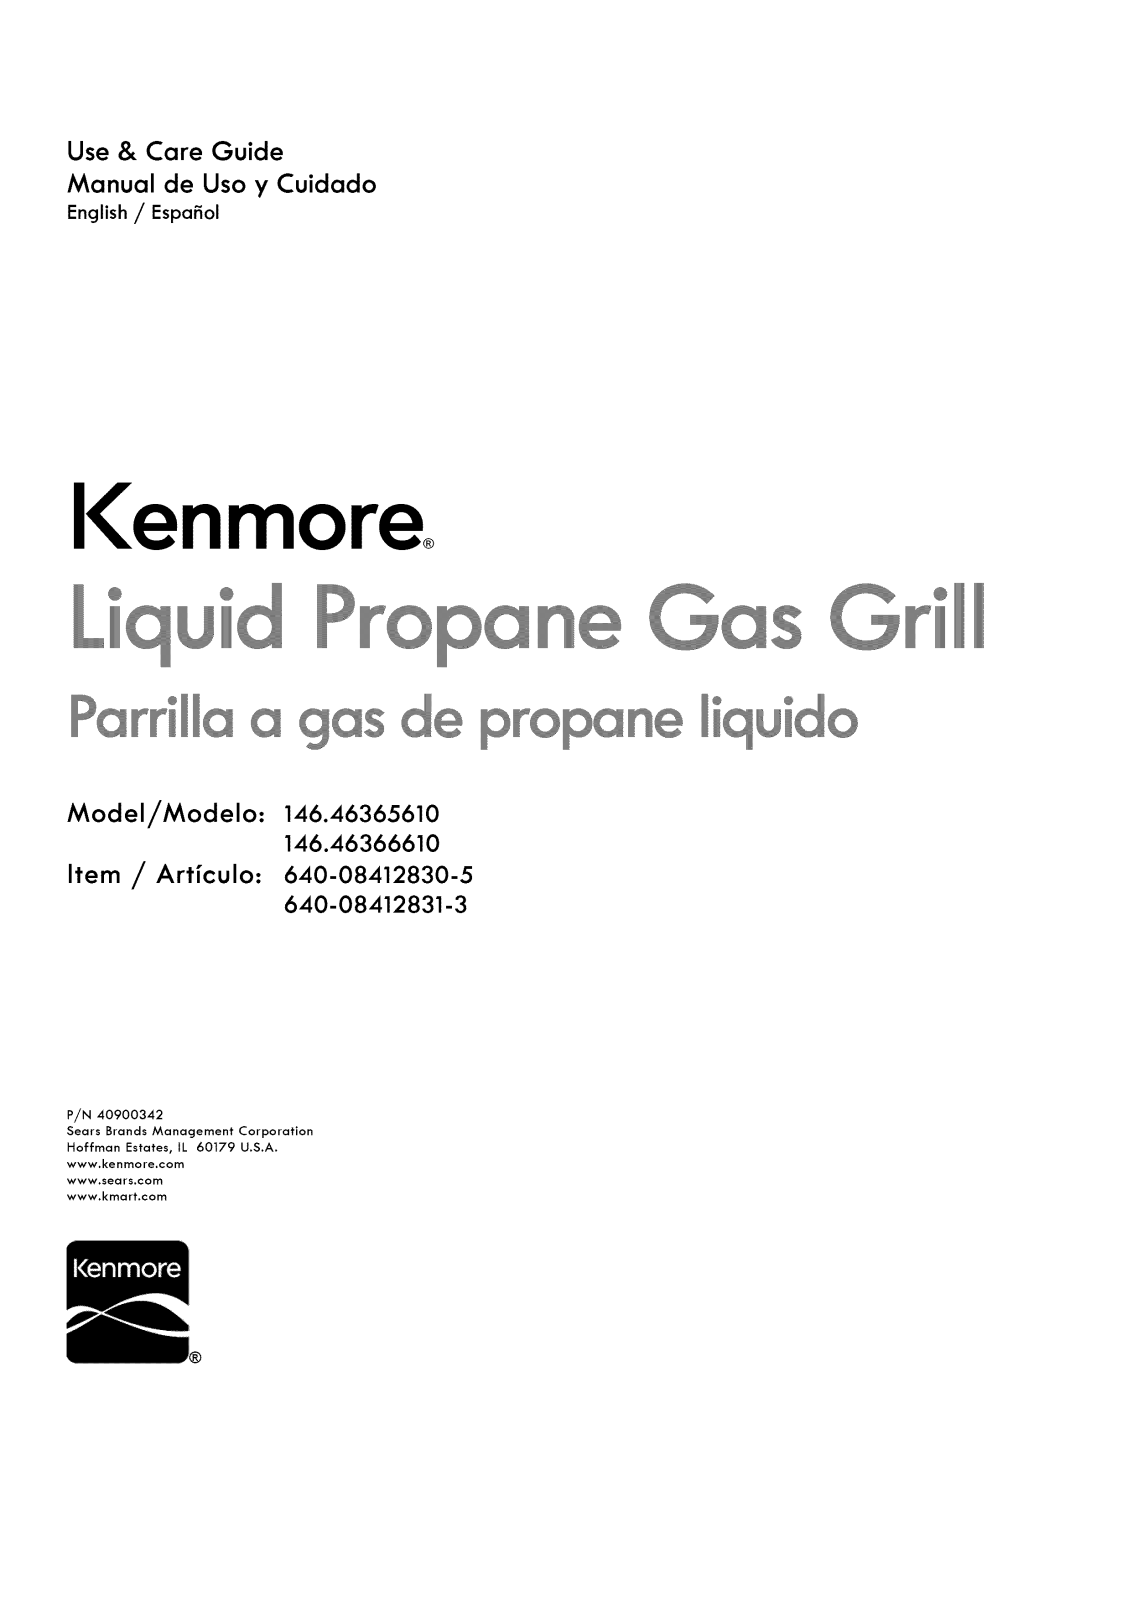 Kenmore PG-40409SOLB, 14646366610, 14646365610 Owner’s Manual